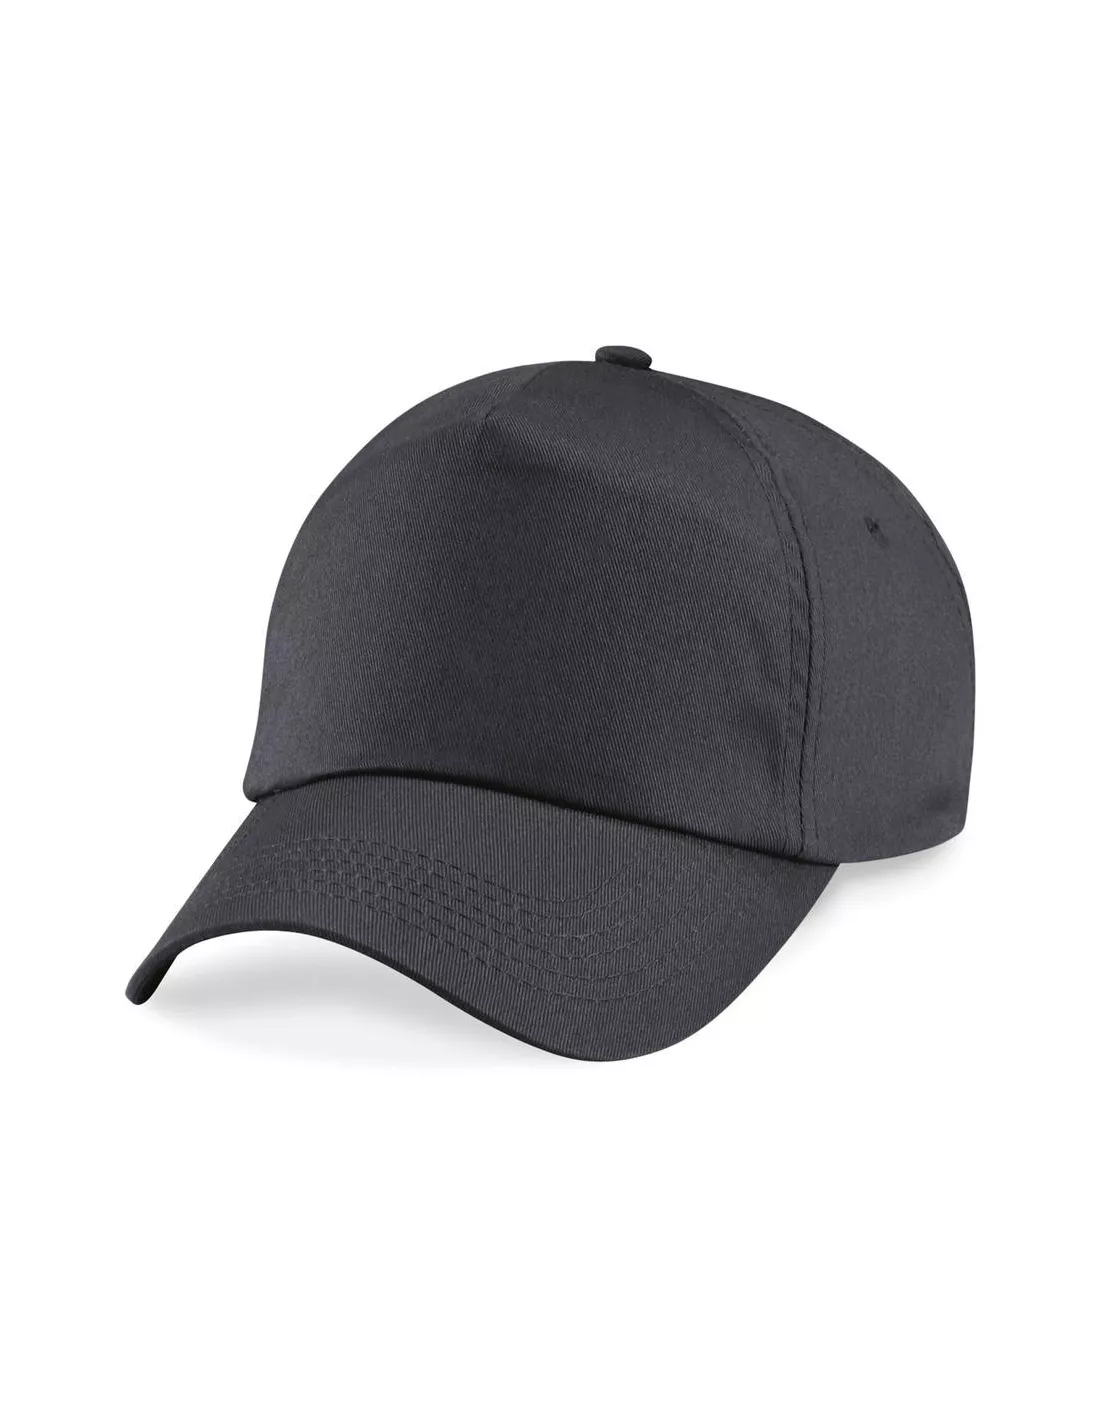 Gorra Beisbolera de color gris oscuro ideal para personalizar con tu marca